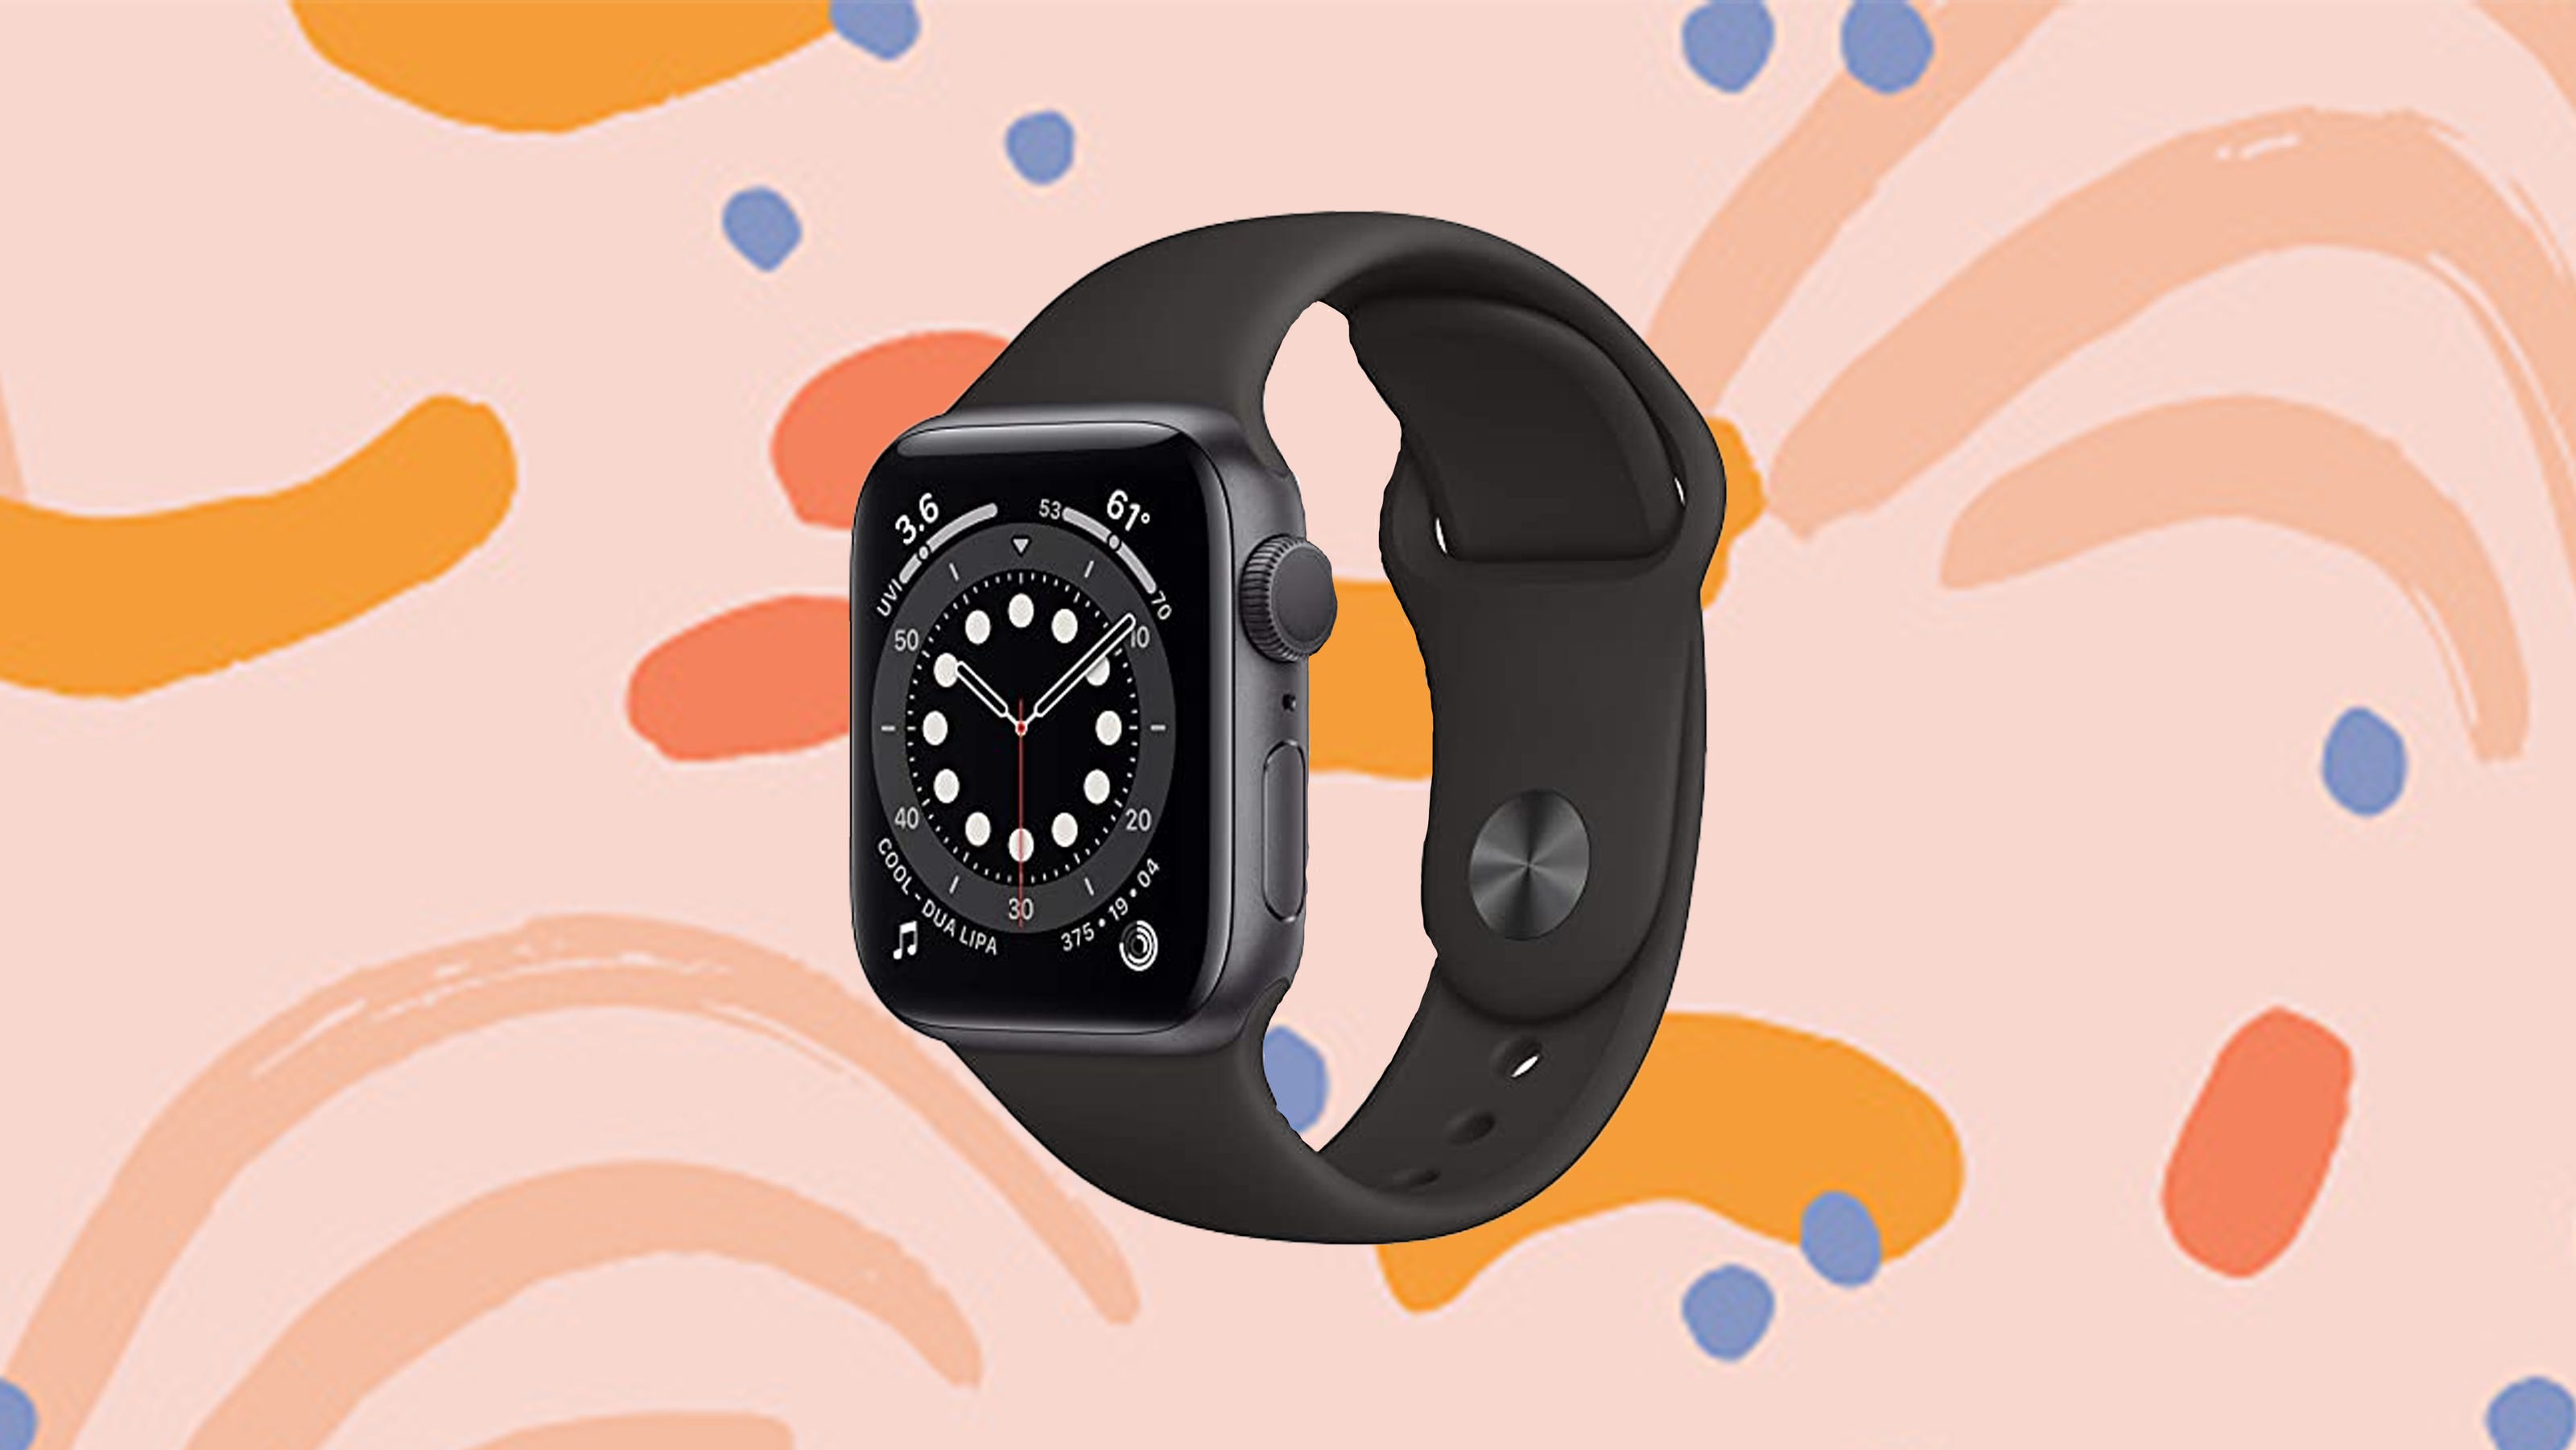 Apple Watch Series 6 Get Apple's latestandgreatest smartwatch on sale